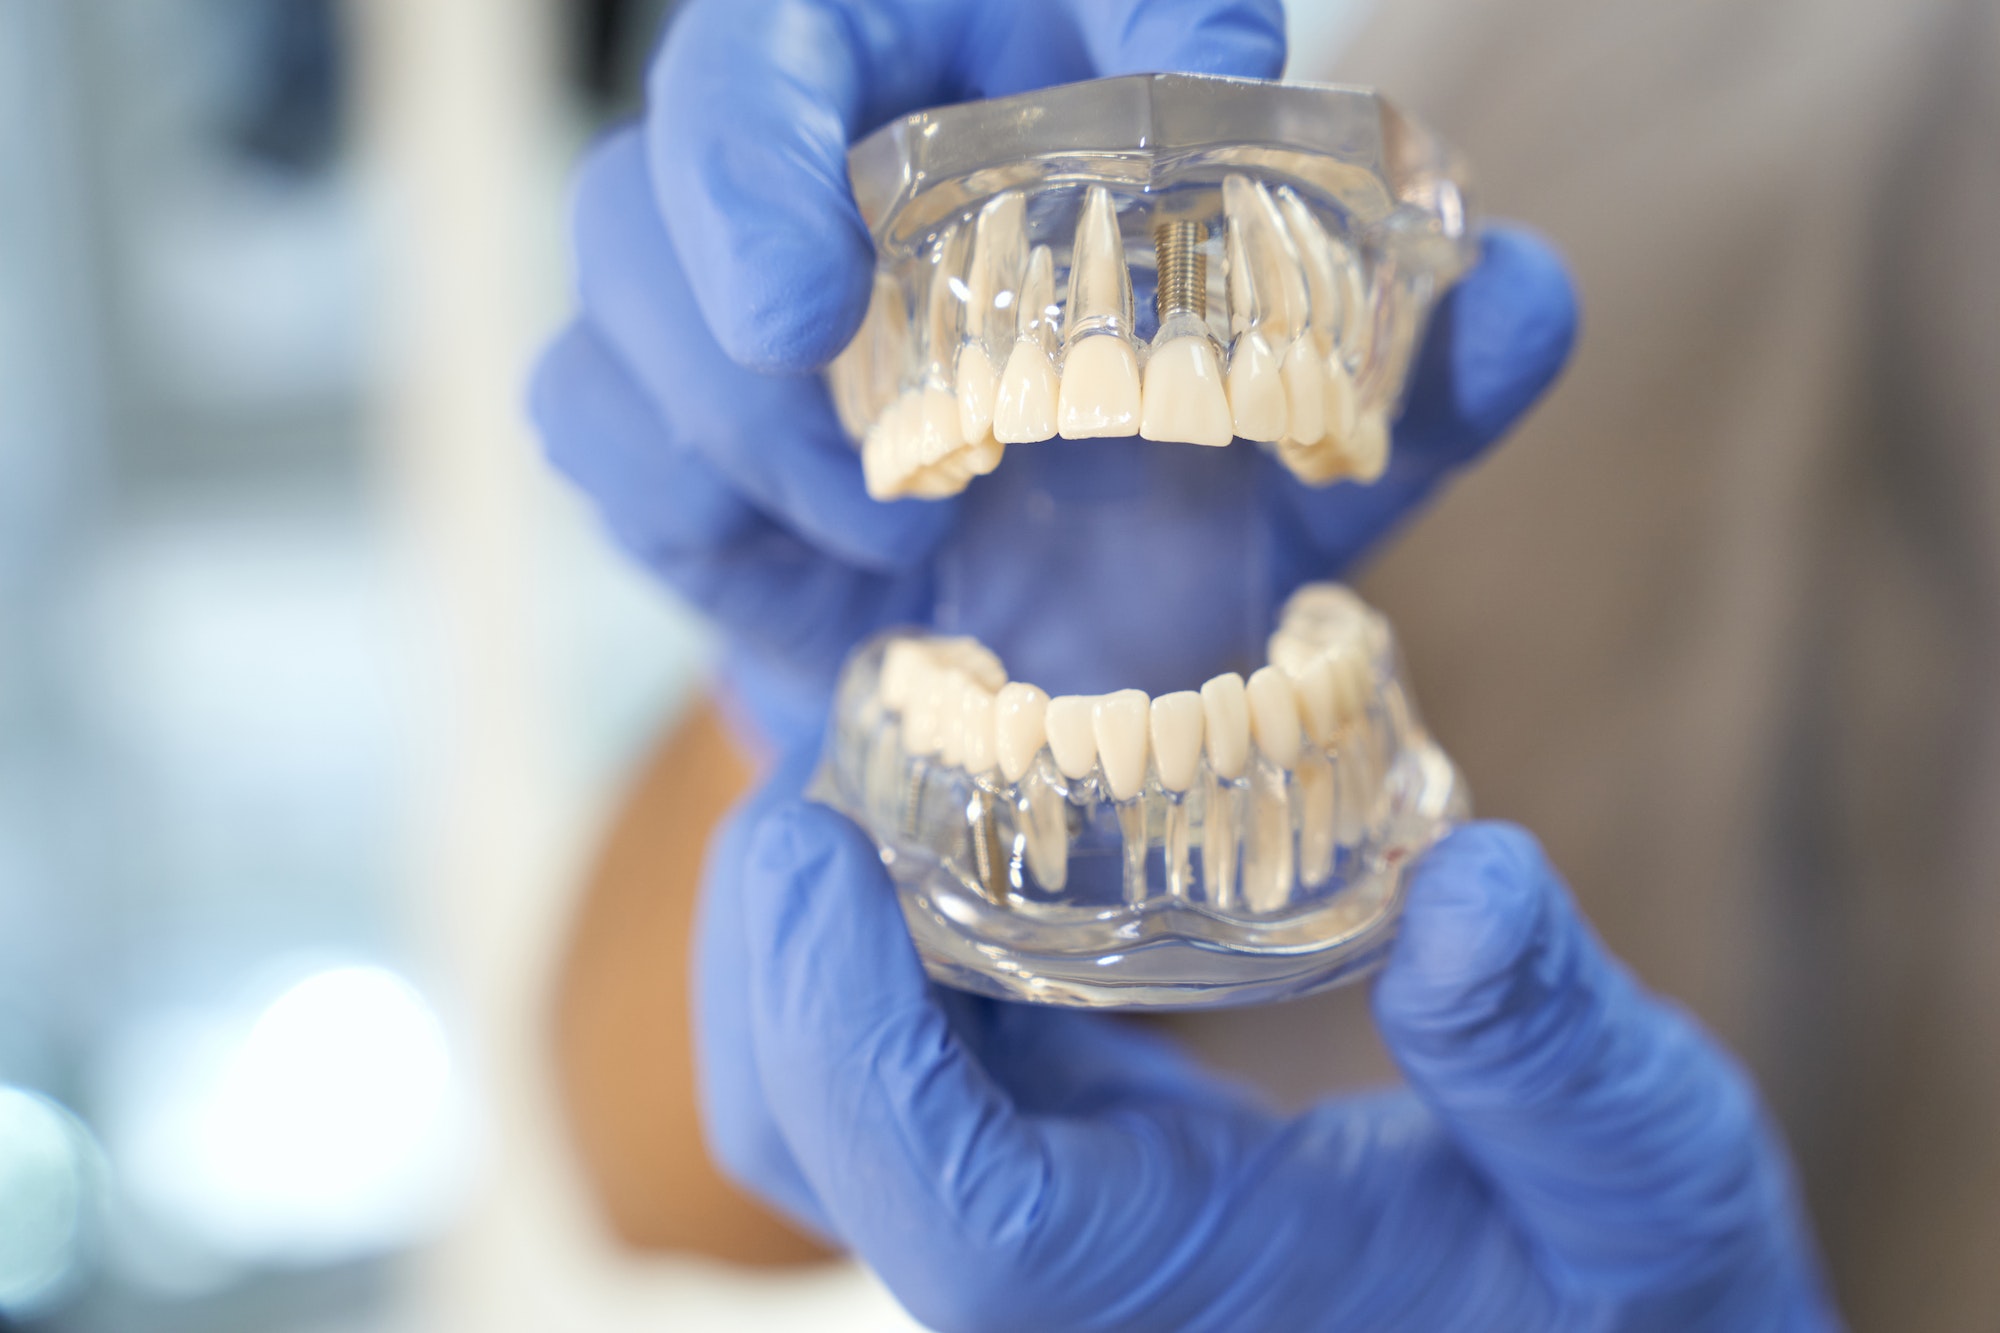 Dentist in gloves demonstrating model of human teeth